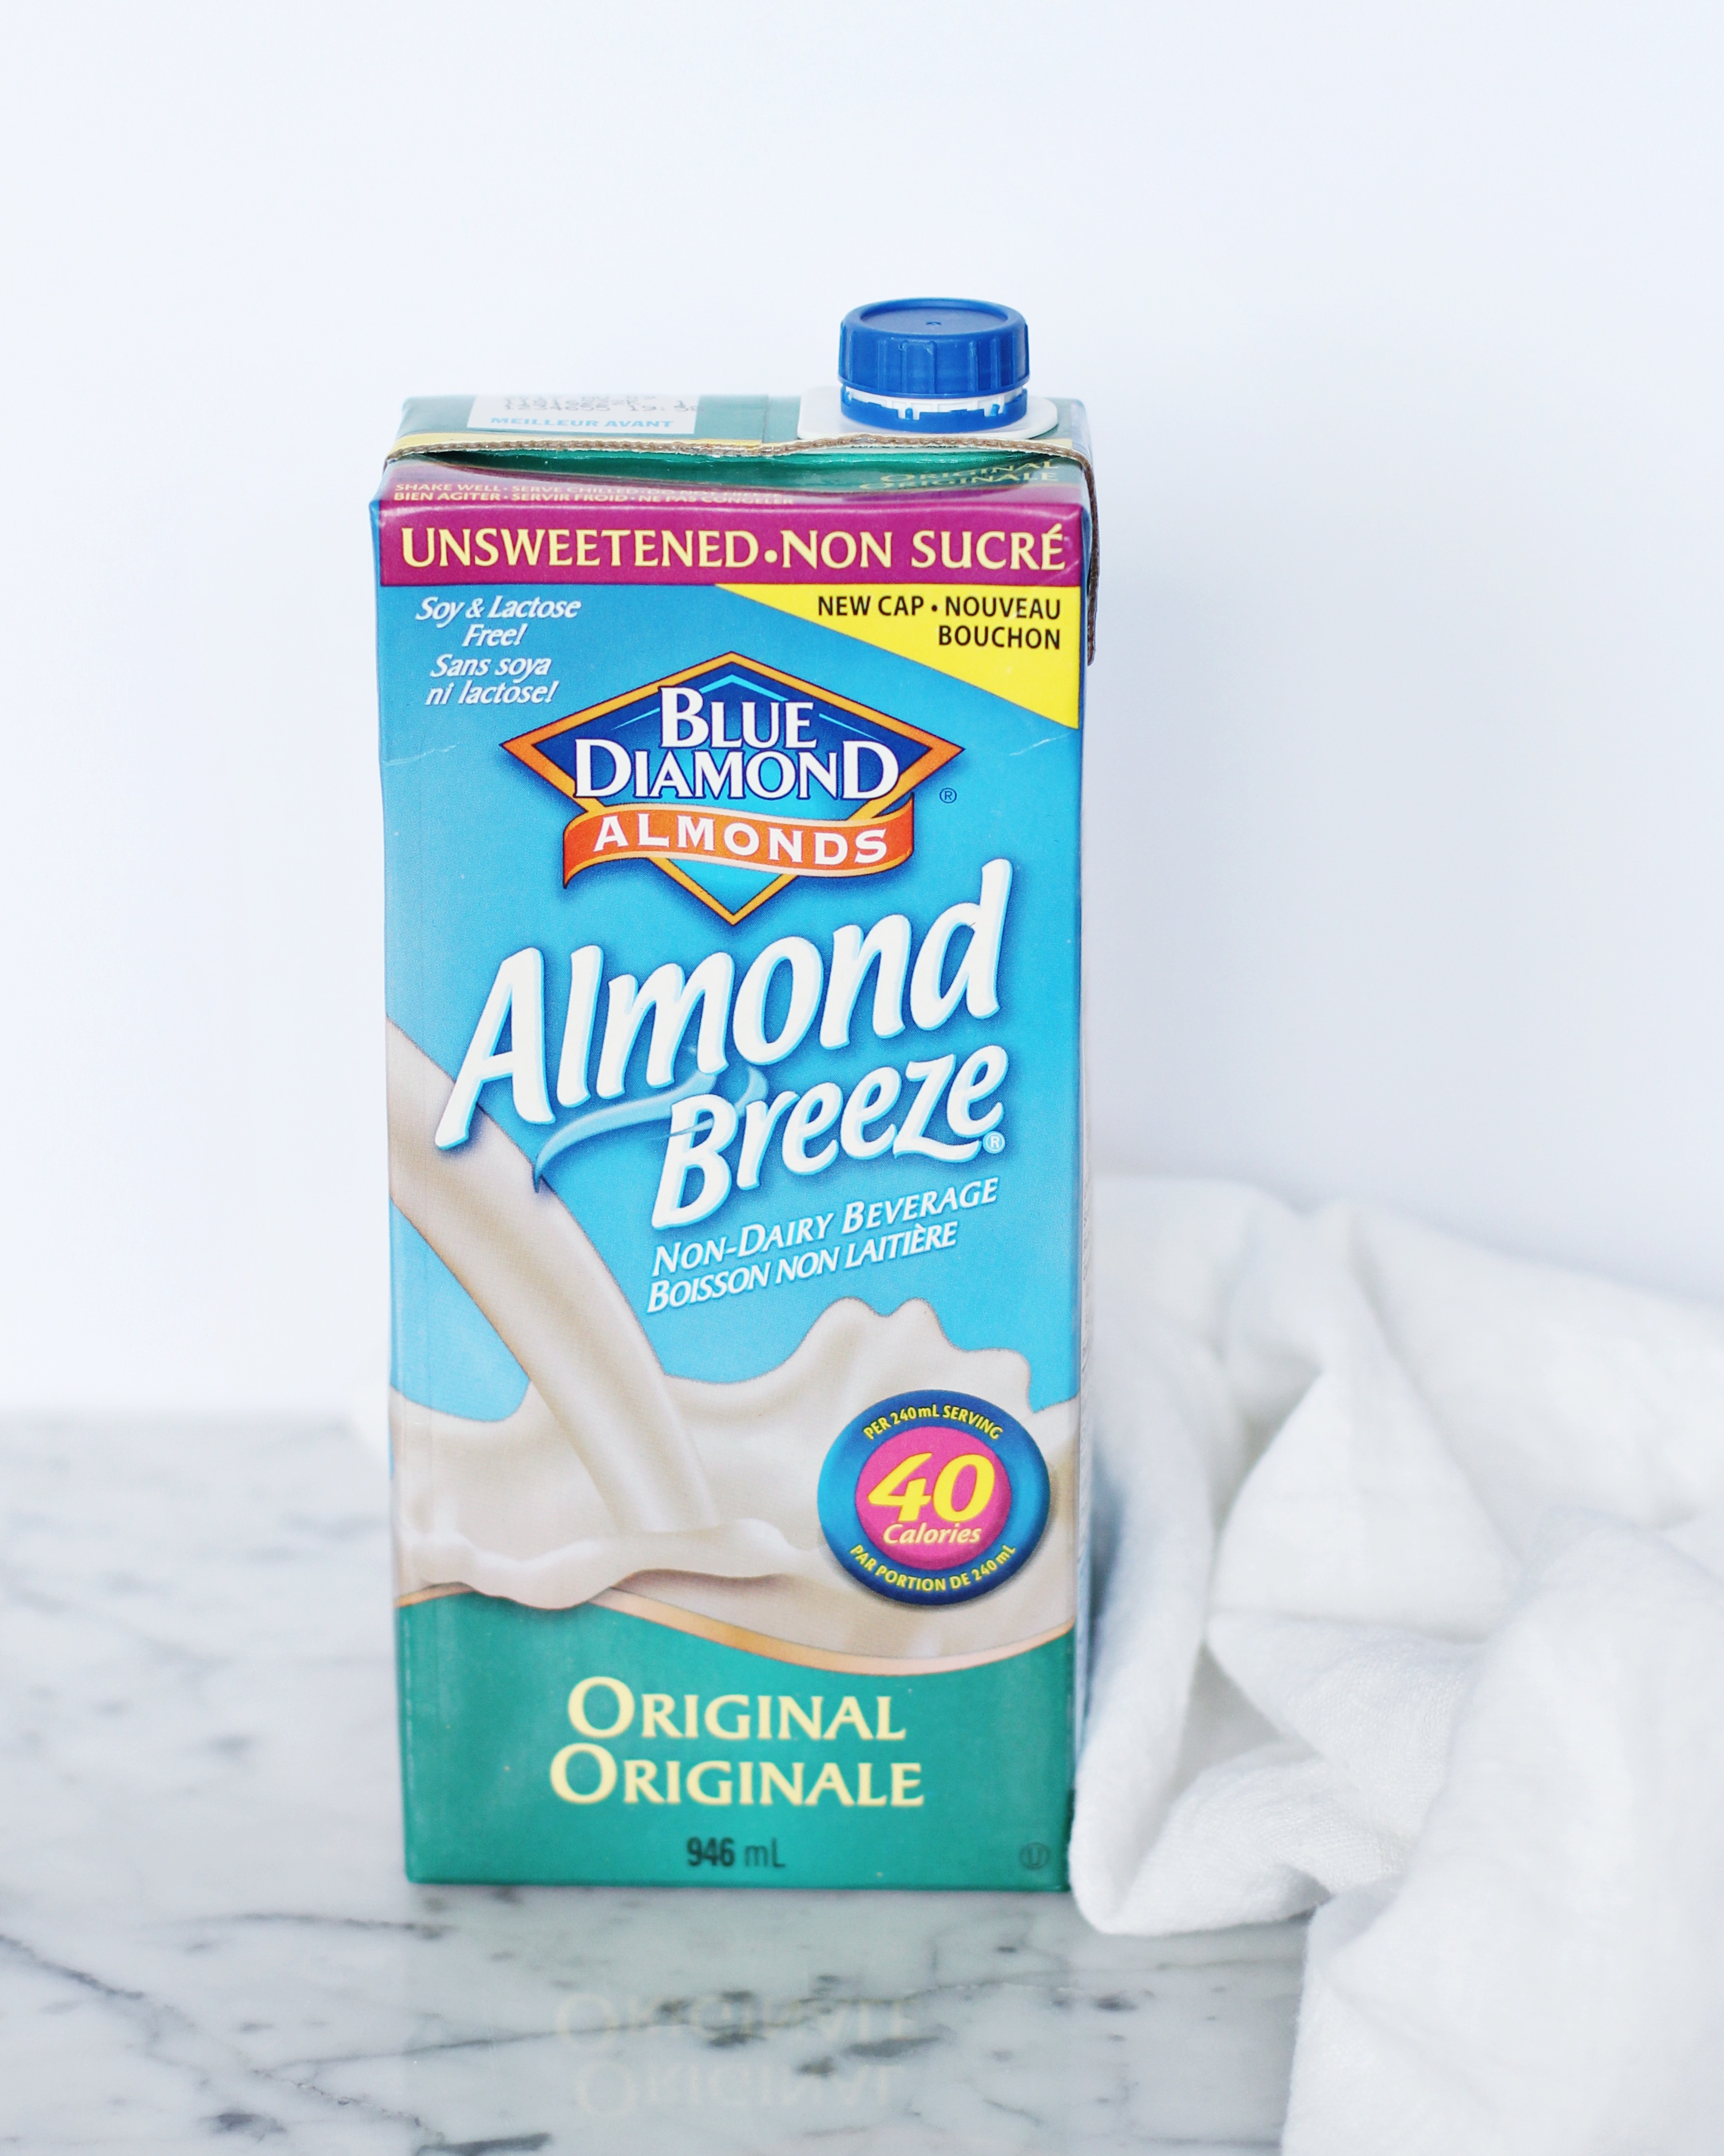 Carton of Almond Breeze non-dairy beverage 